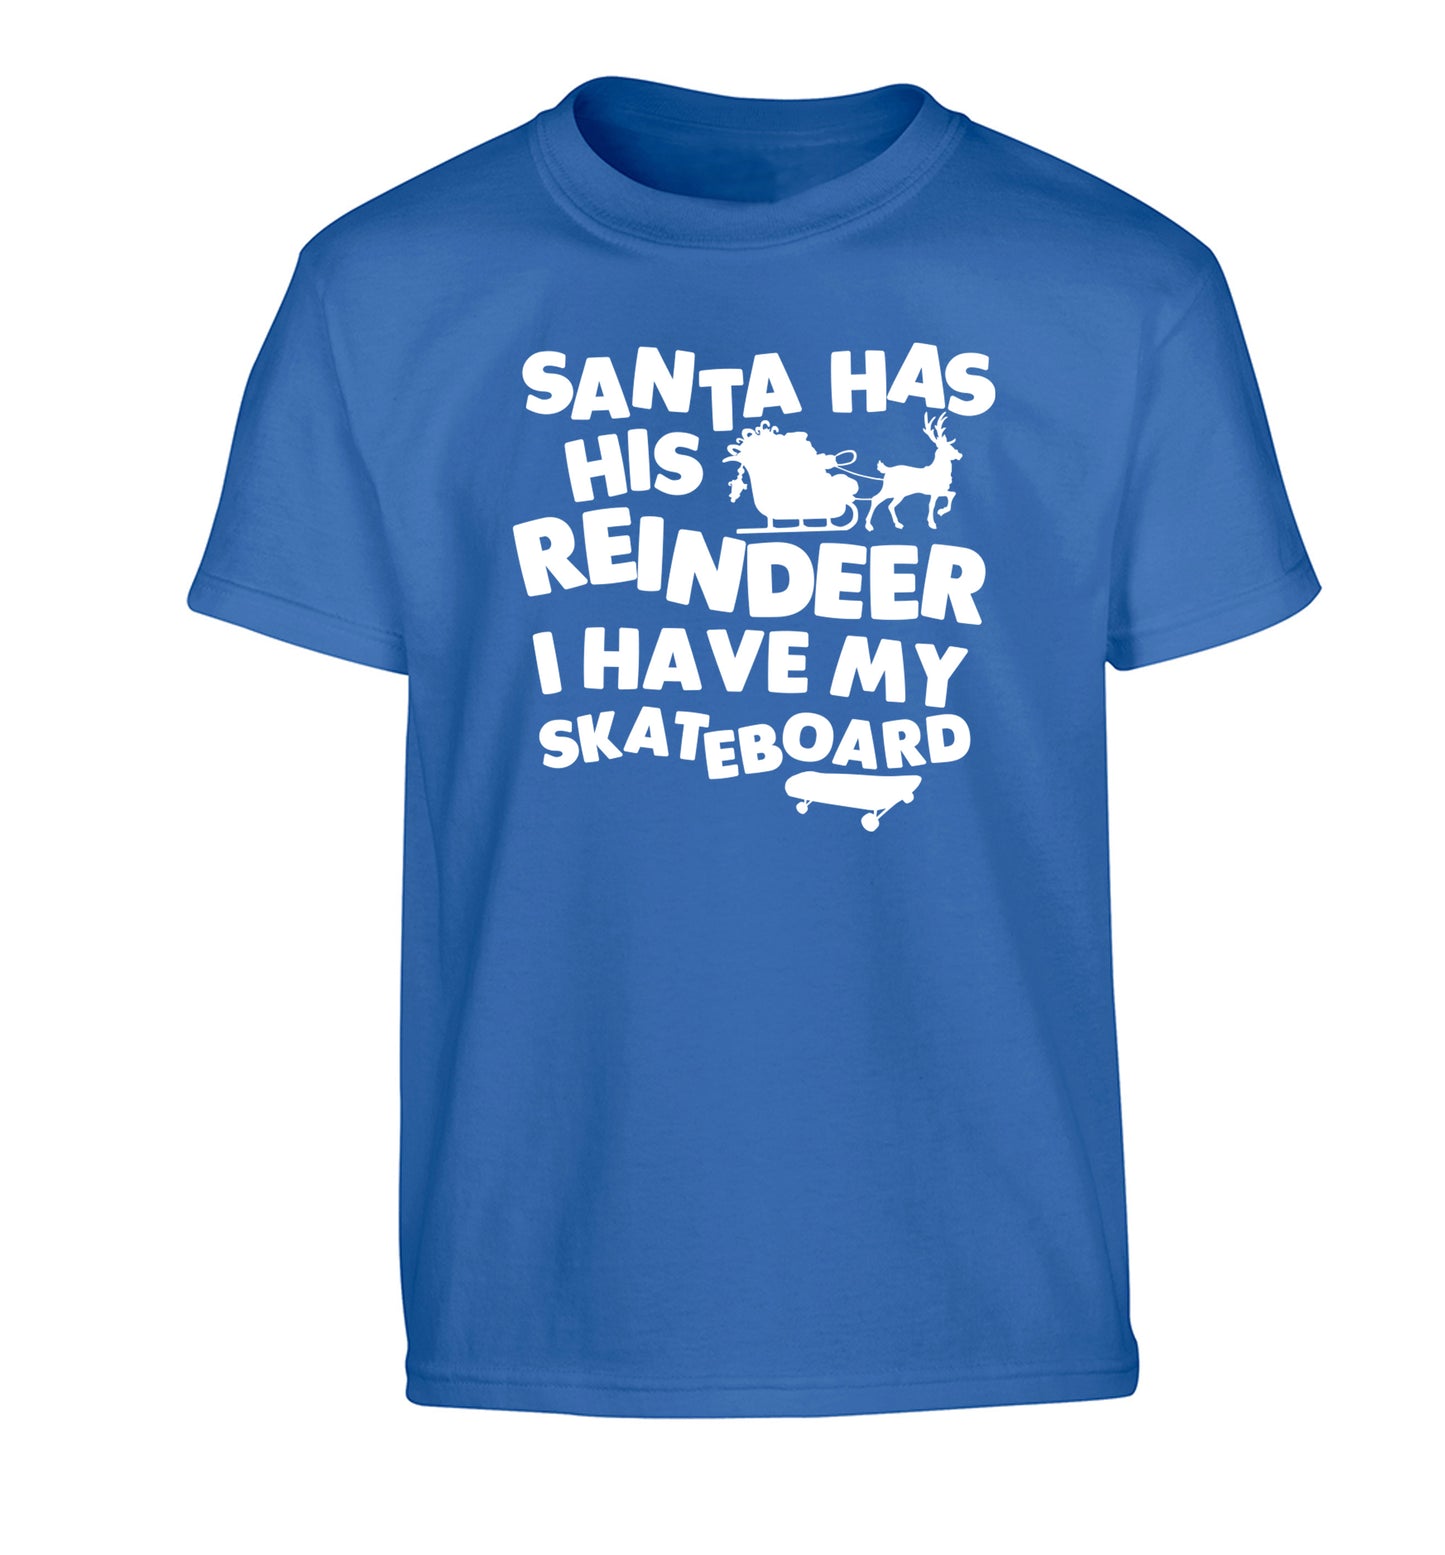 Santa has his reindeer I have my skateboard Children's blue Tshirt 12-14 Years